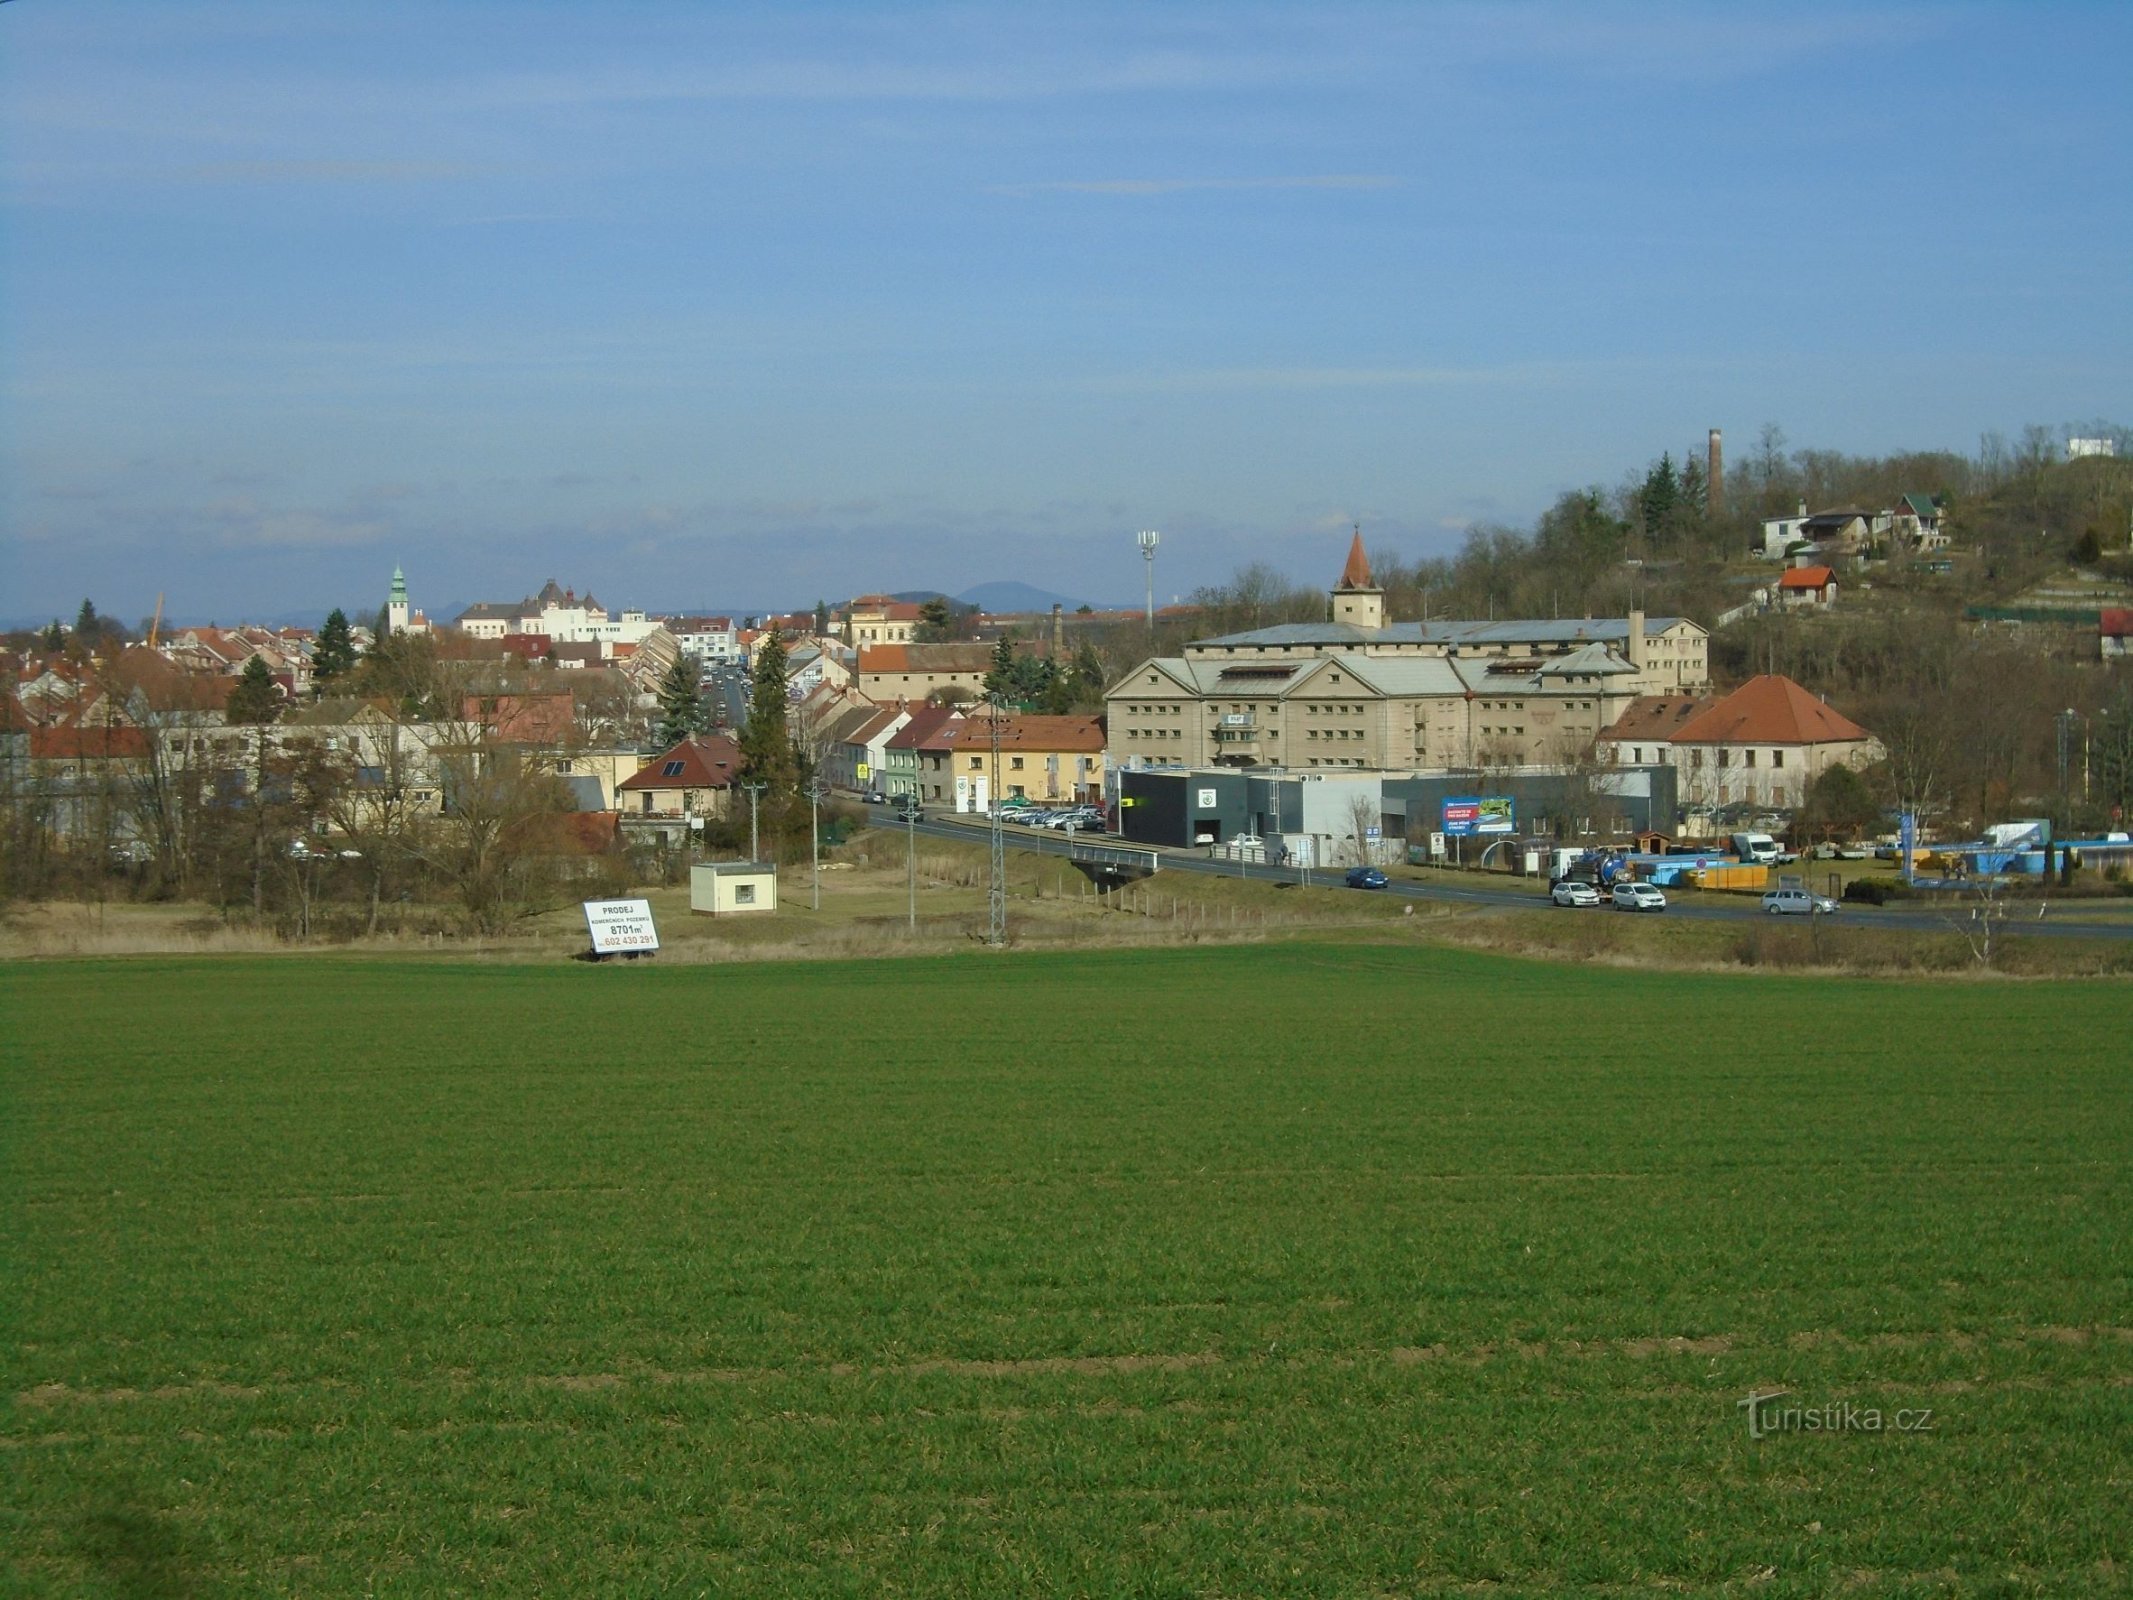 Roudnice nad Labem kilátása (6.3.2019. március XNUMX.)